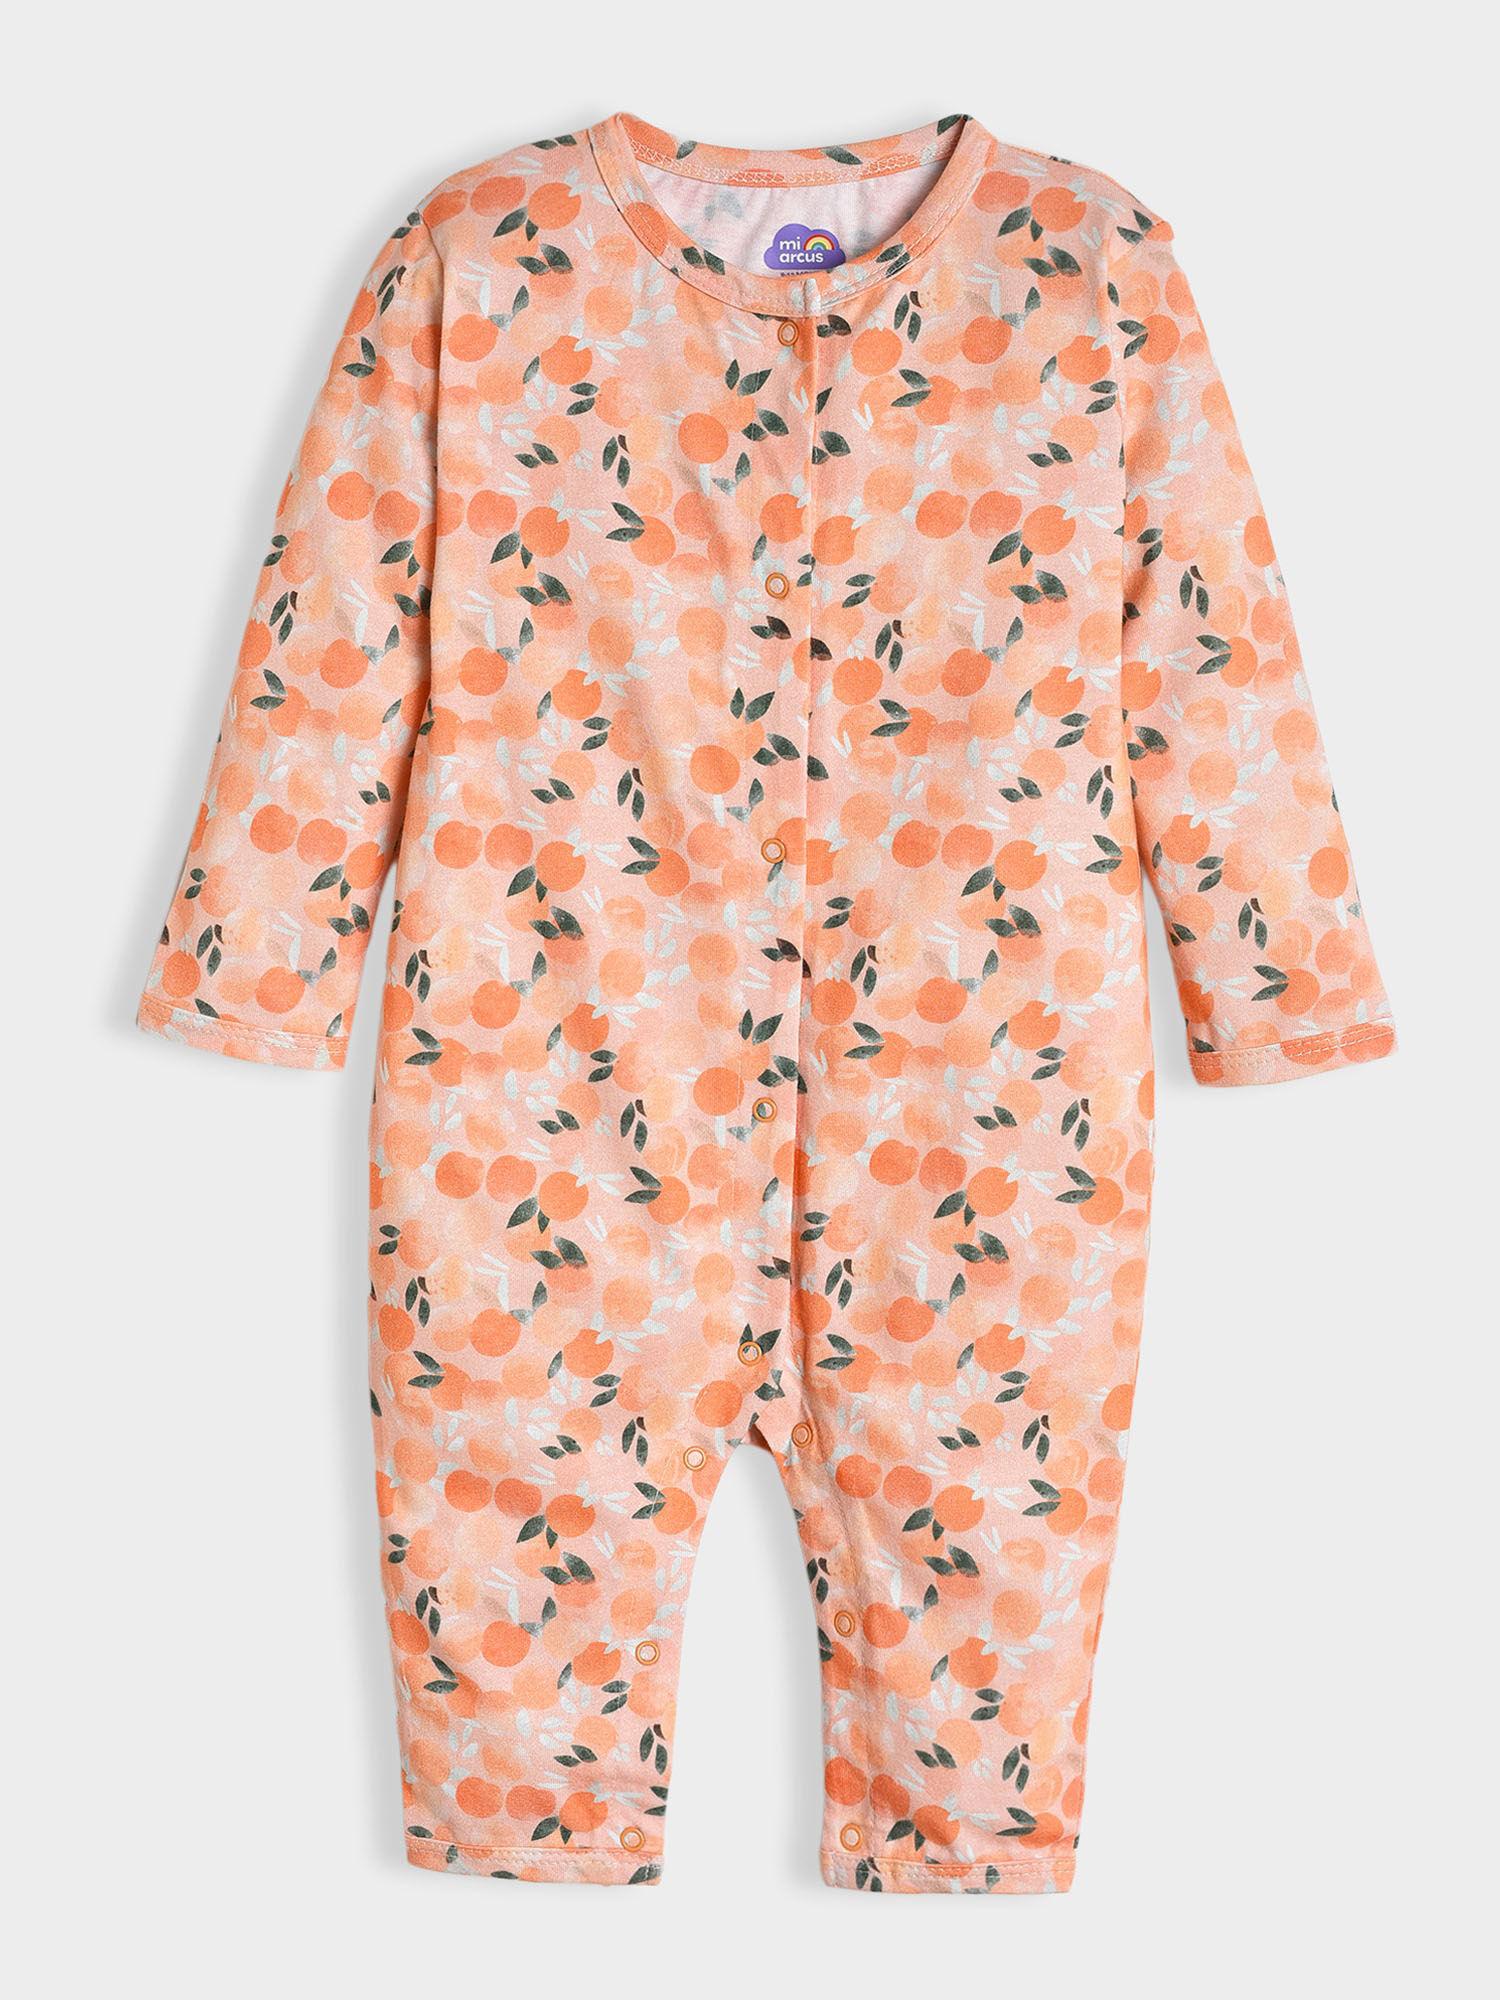 peach cotton printed full sleeve sleepsuit for kids